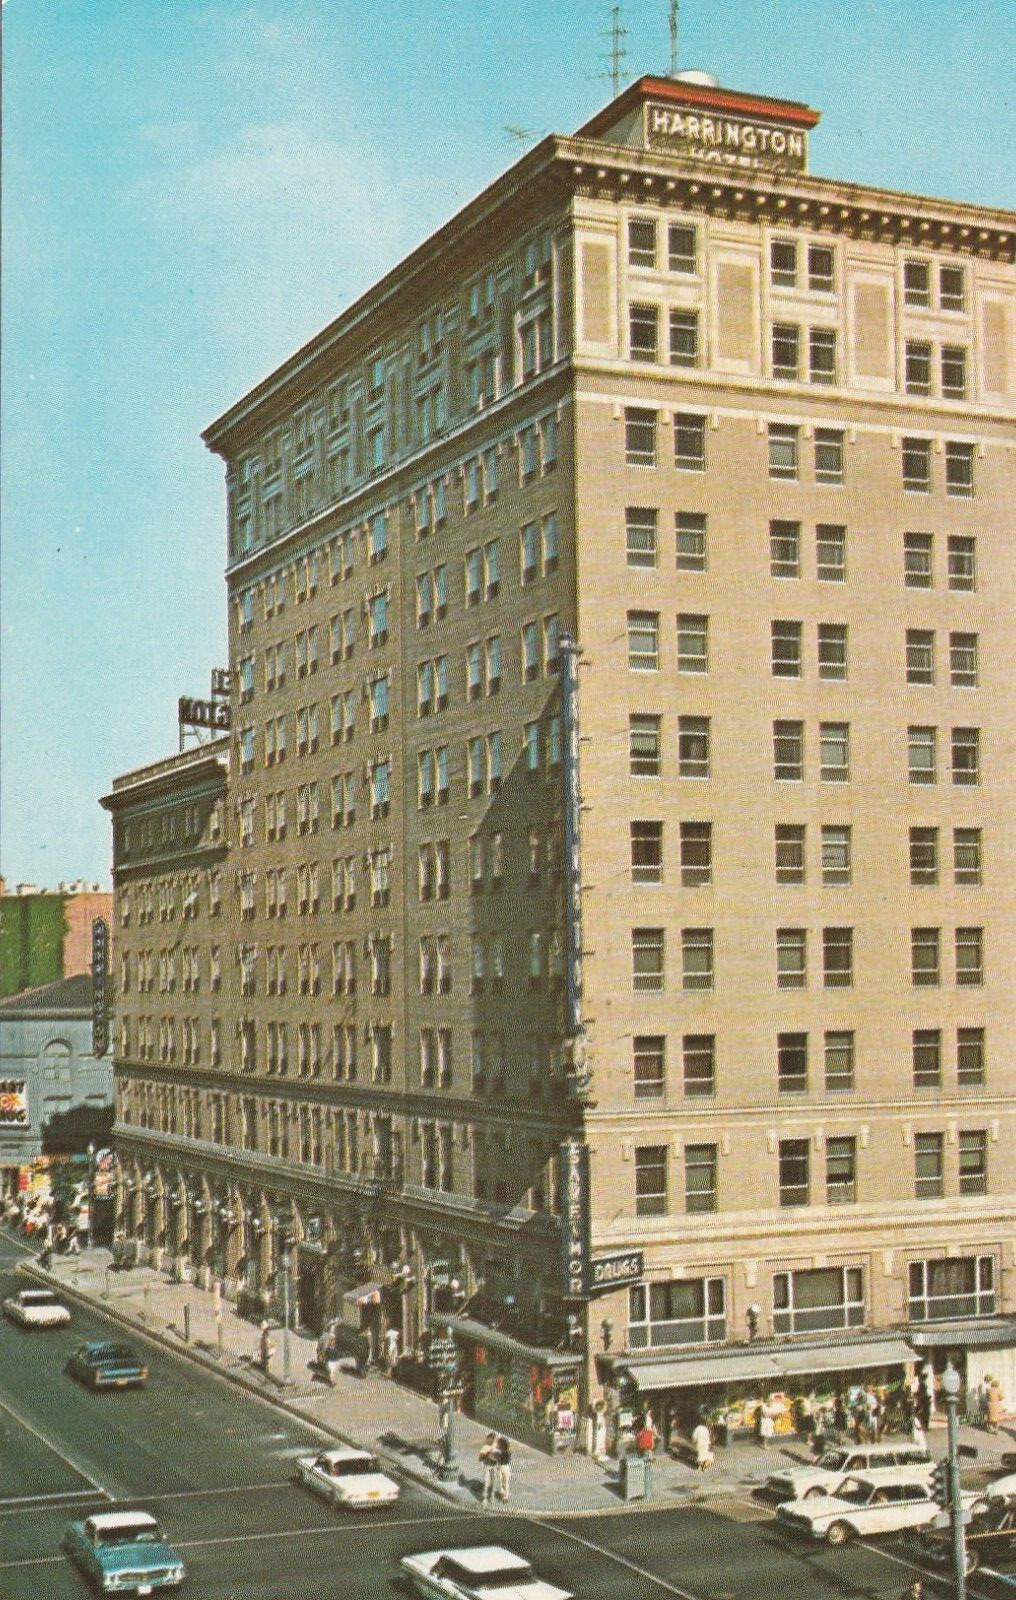 Washington DC-Harrington Hotel, Advertisement, Vintage Souvenir Postcard